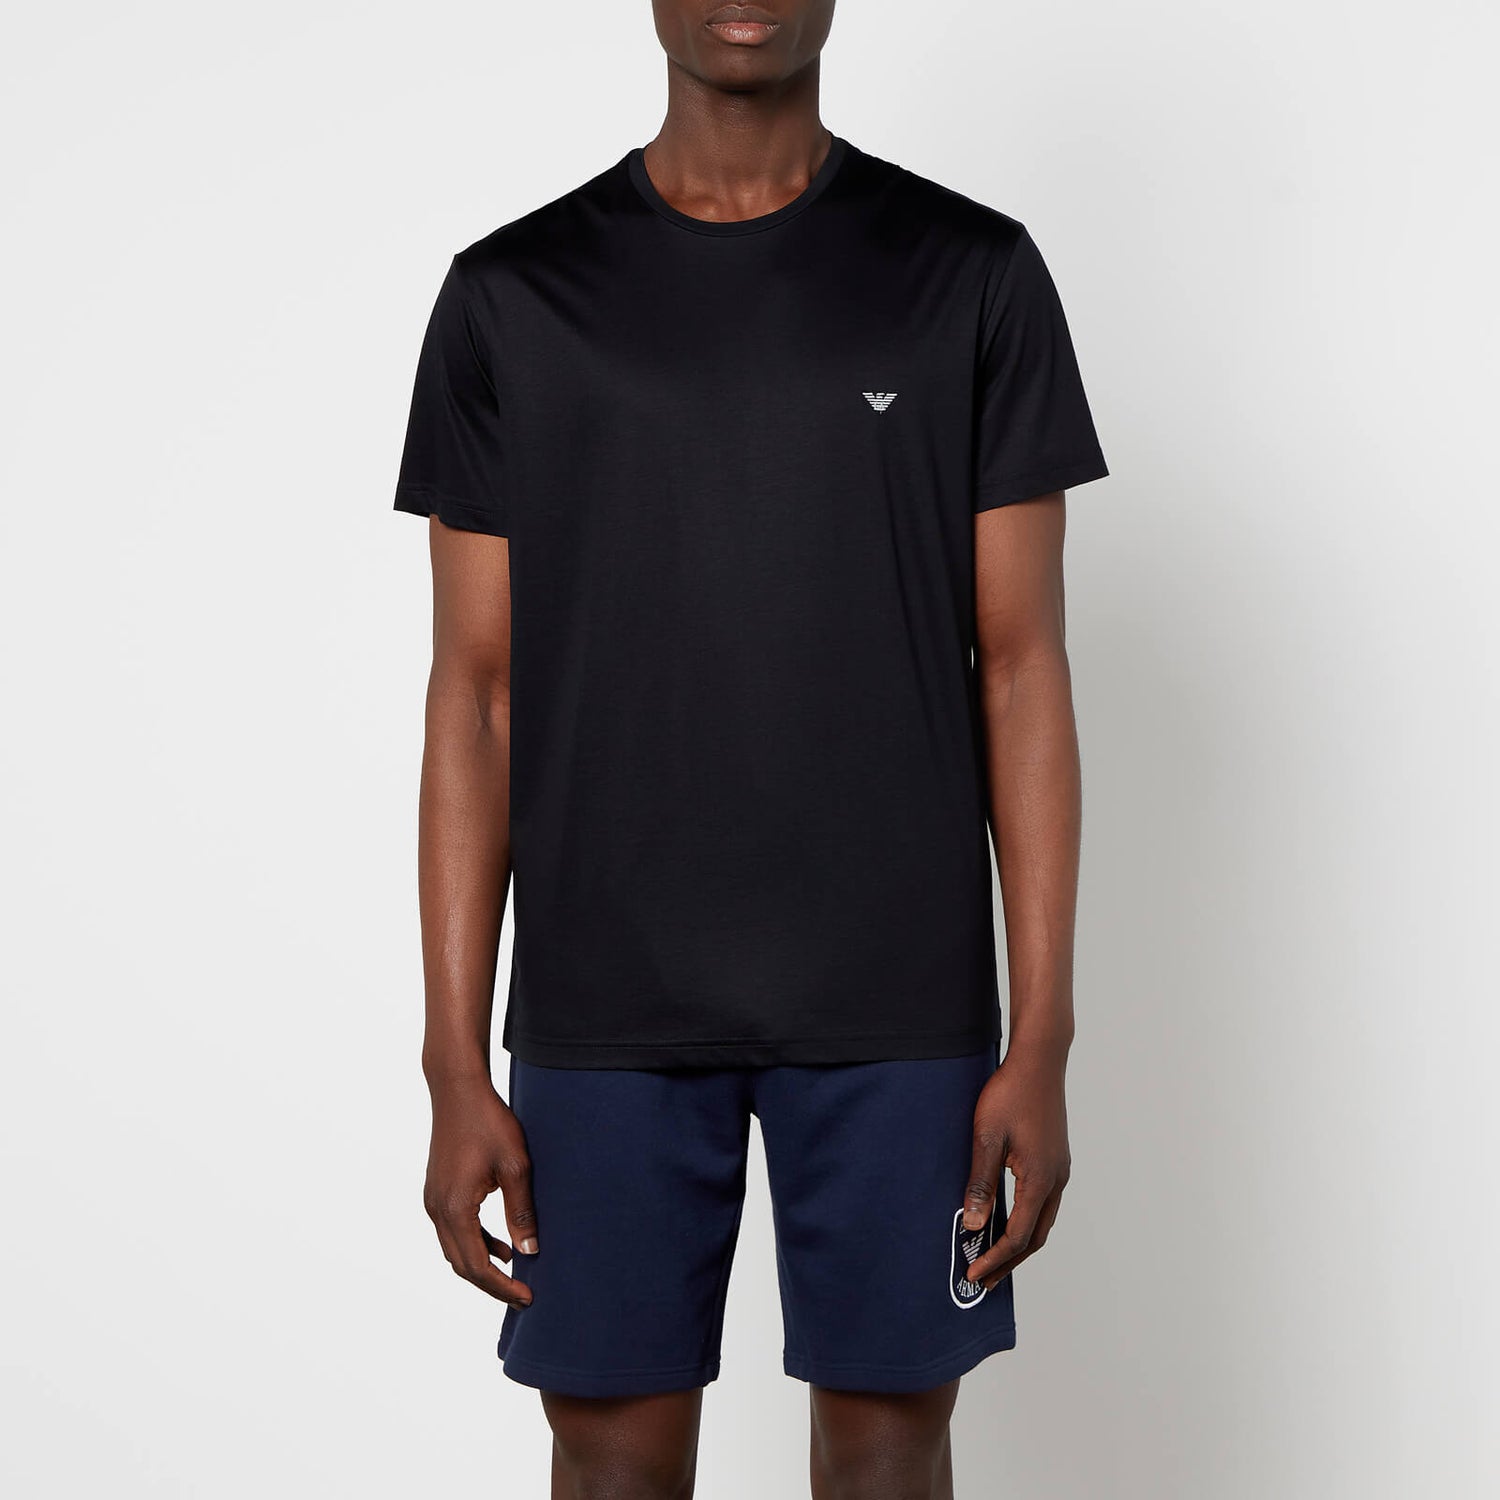 Emporio Armani Men's Ultra Light Modal Blend T-Shirt - Black - S